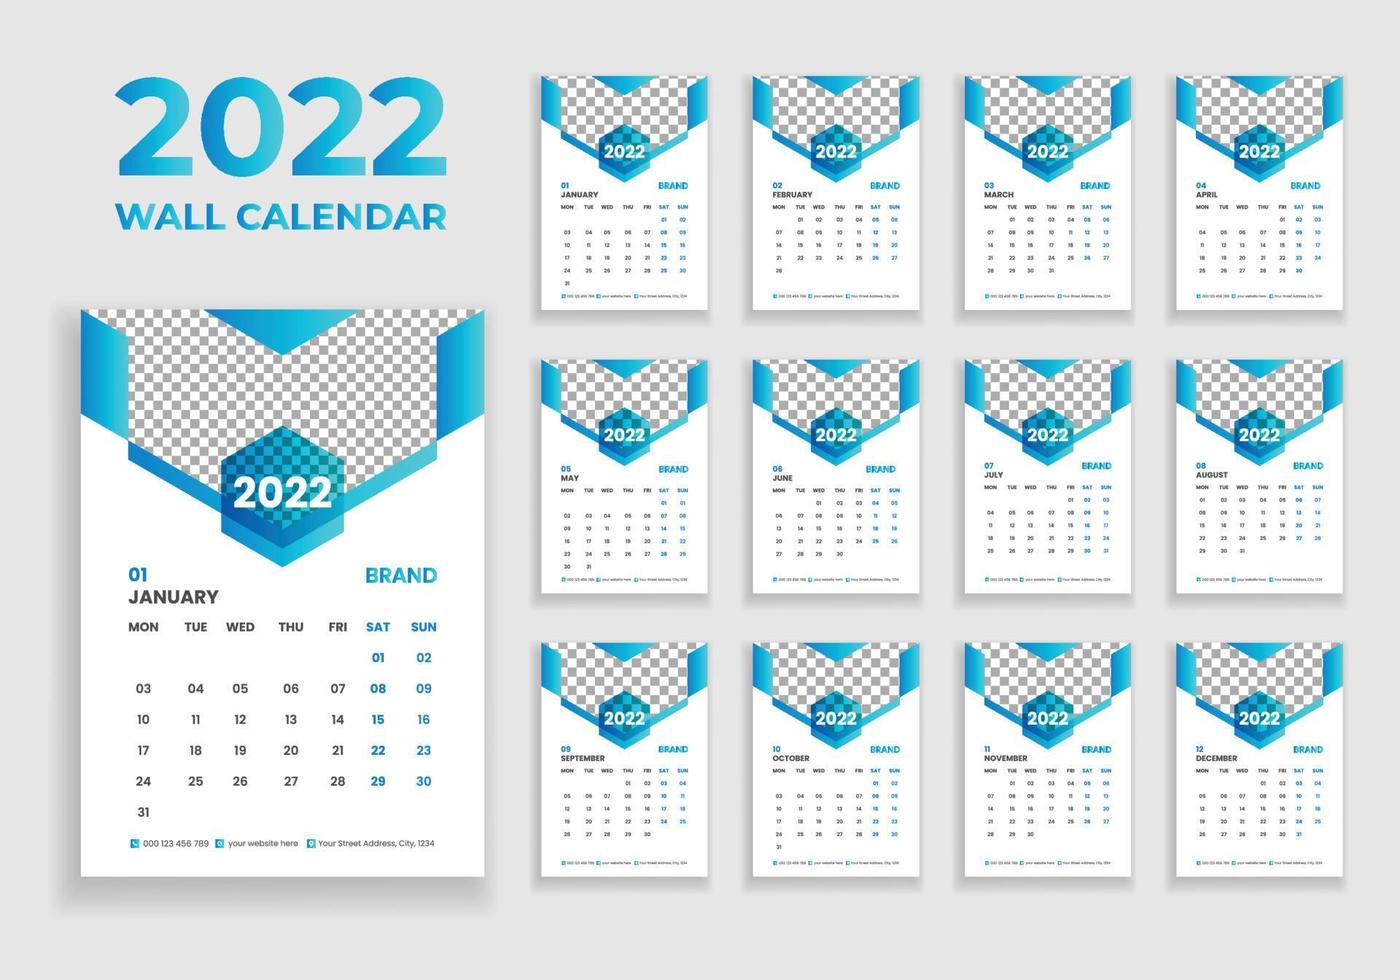 Wall Calendar Design 2022. Wall Calendar Design 2022. New Year Calendar Design 2022. Week Starts on Monday. Template for Annual Calendar 2022 vector